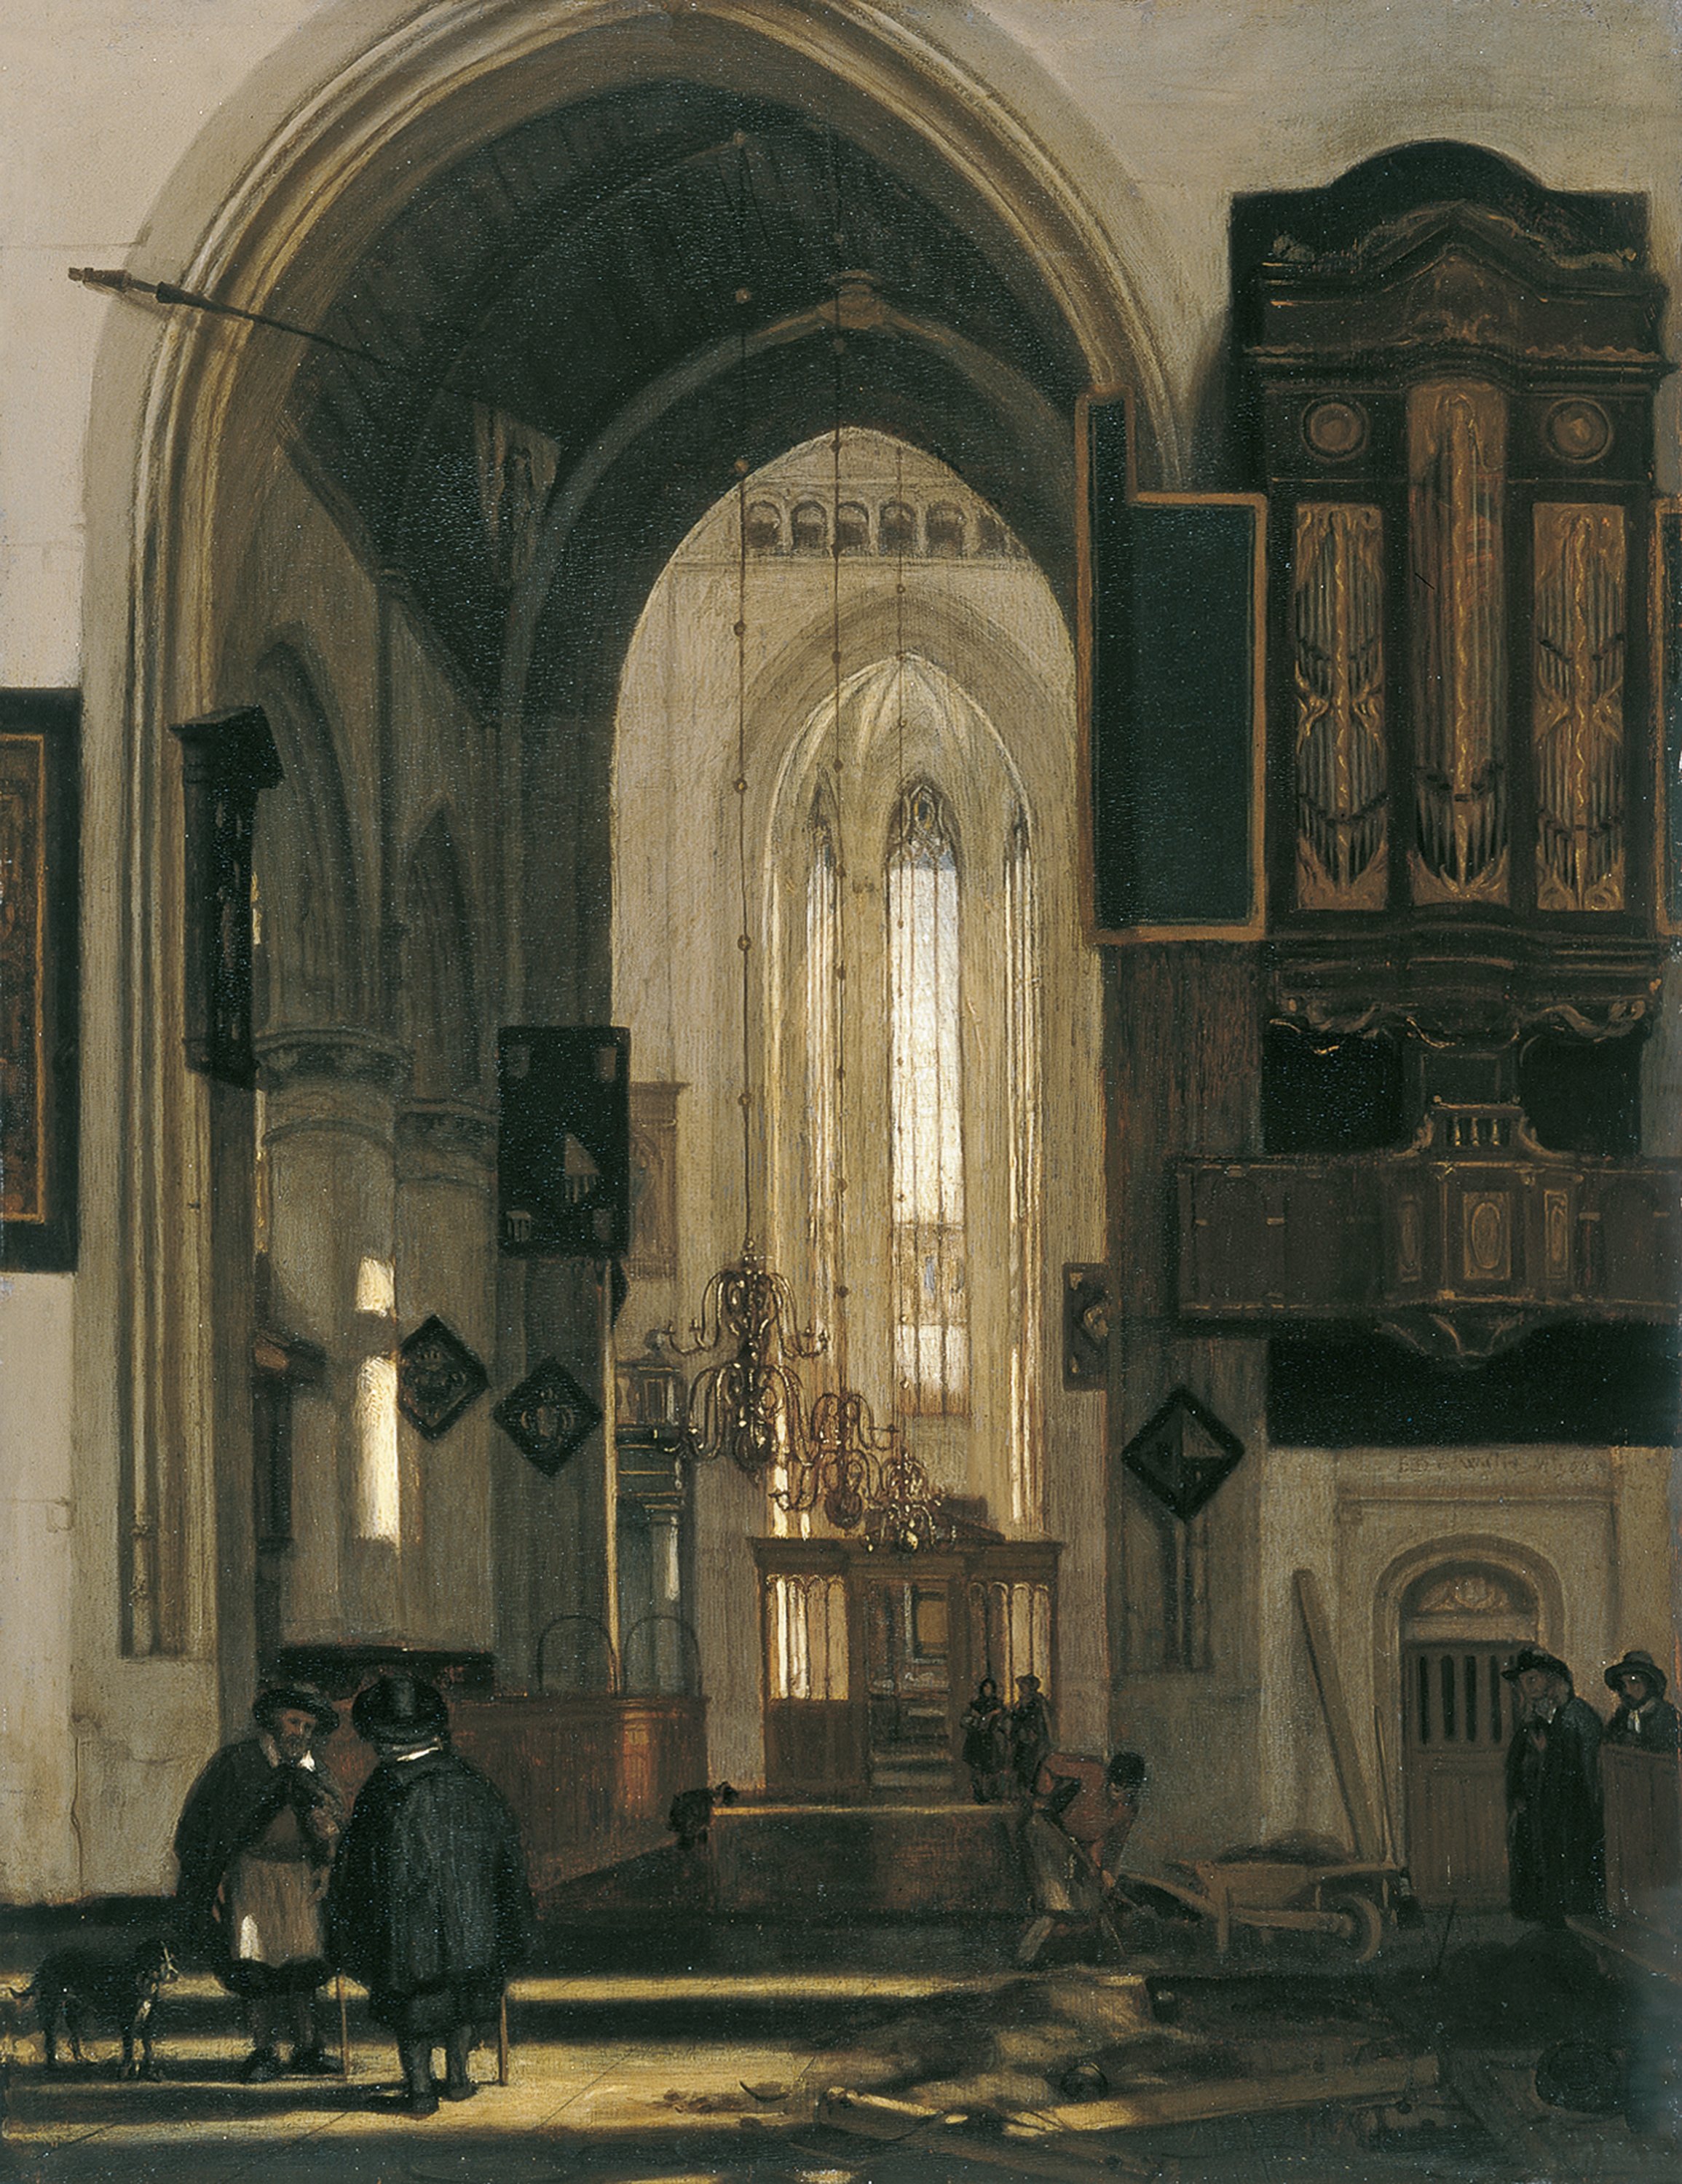 Interior de una Iglesia gótica. Emanuel de Witte